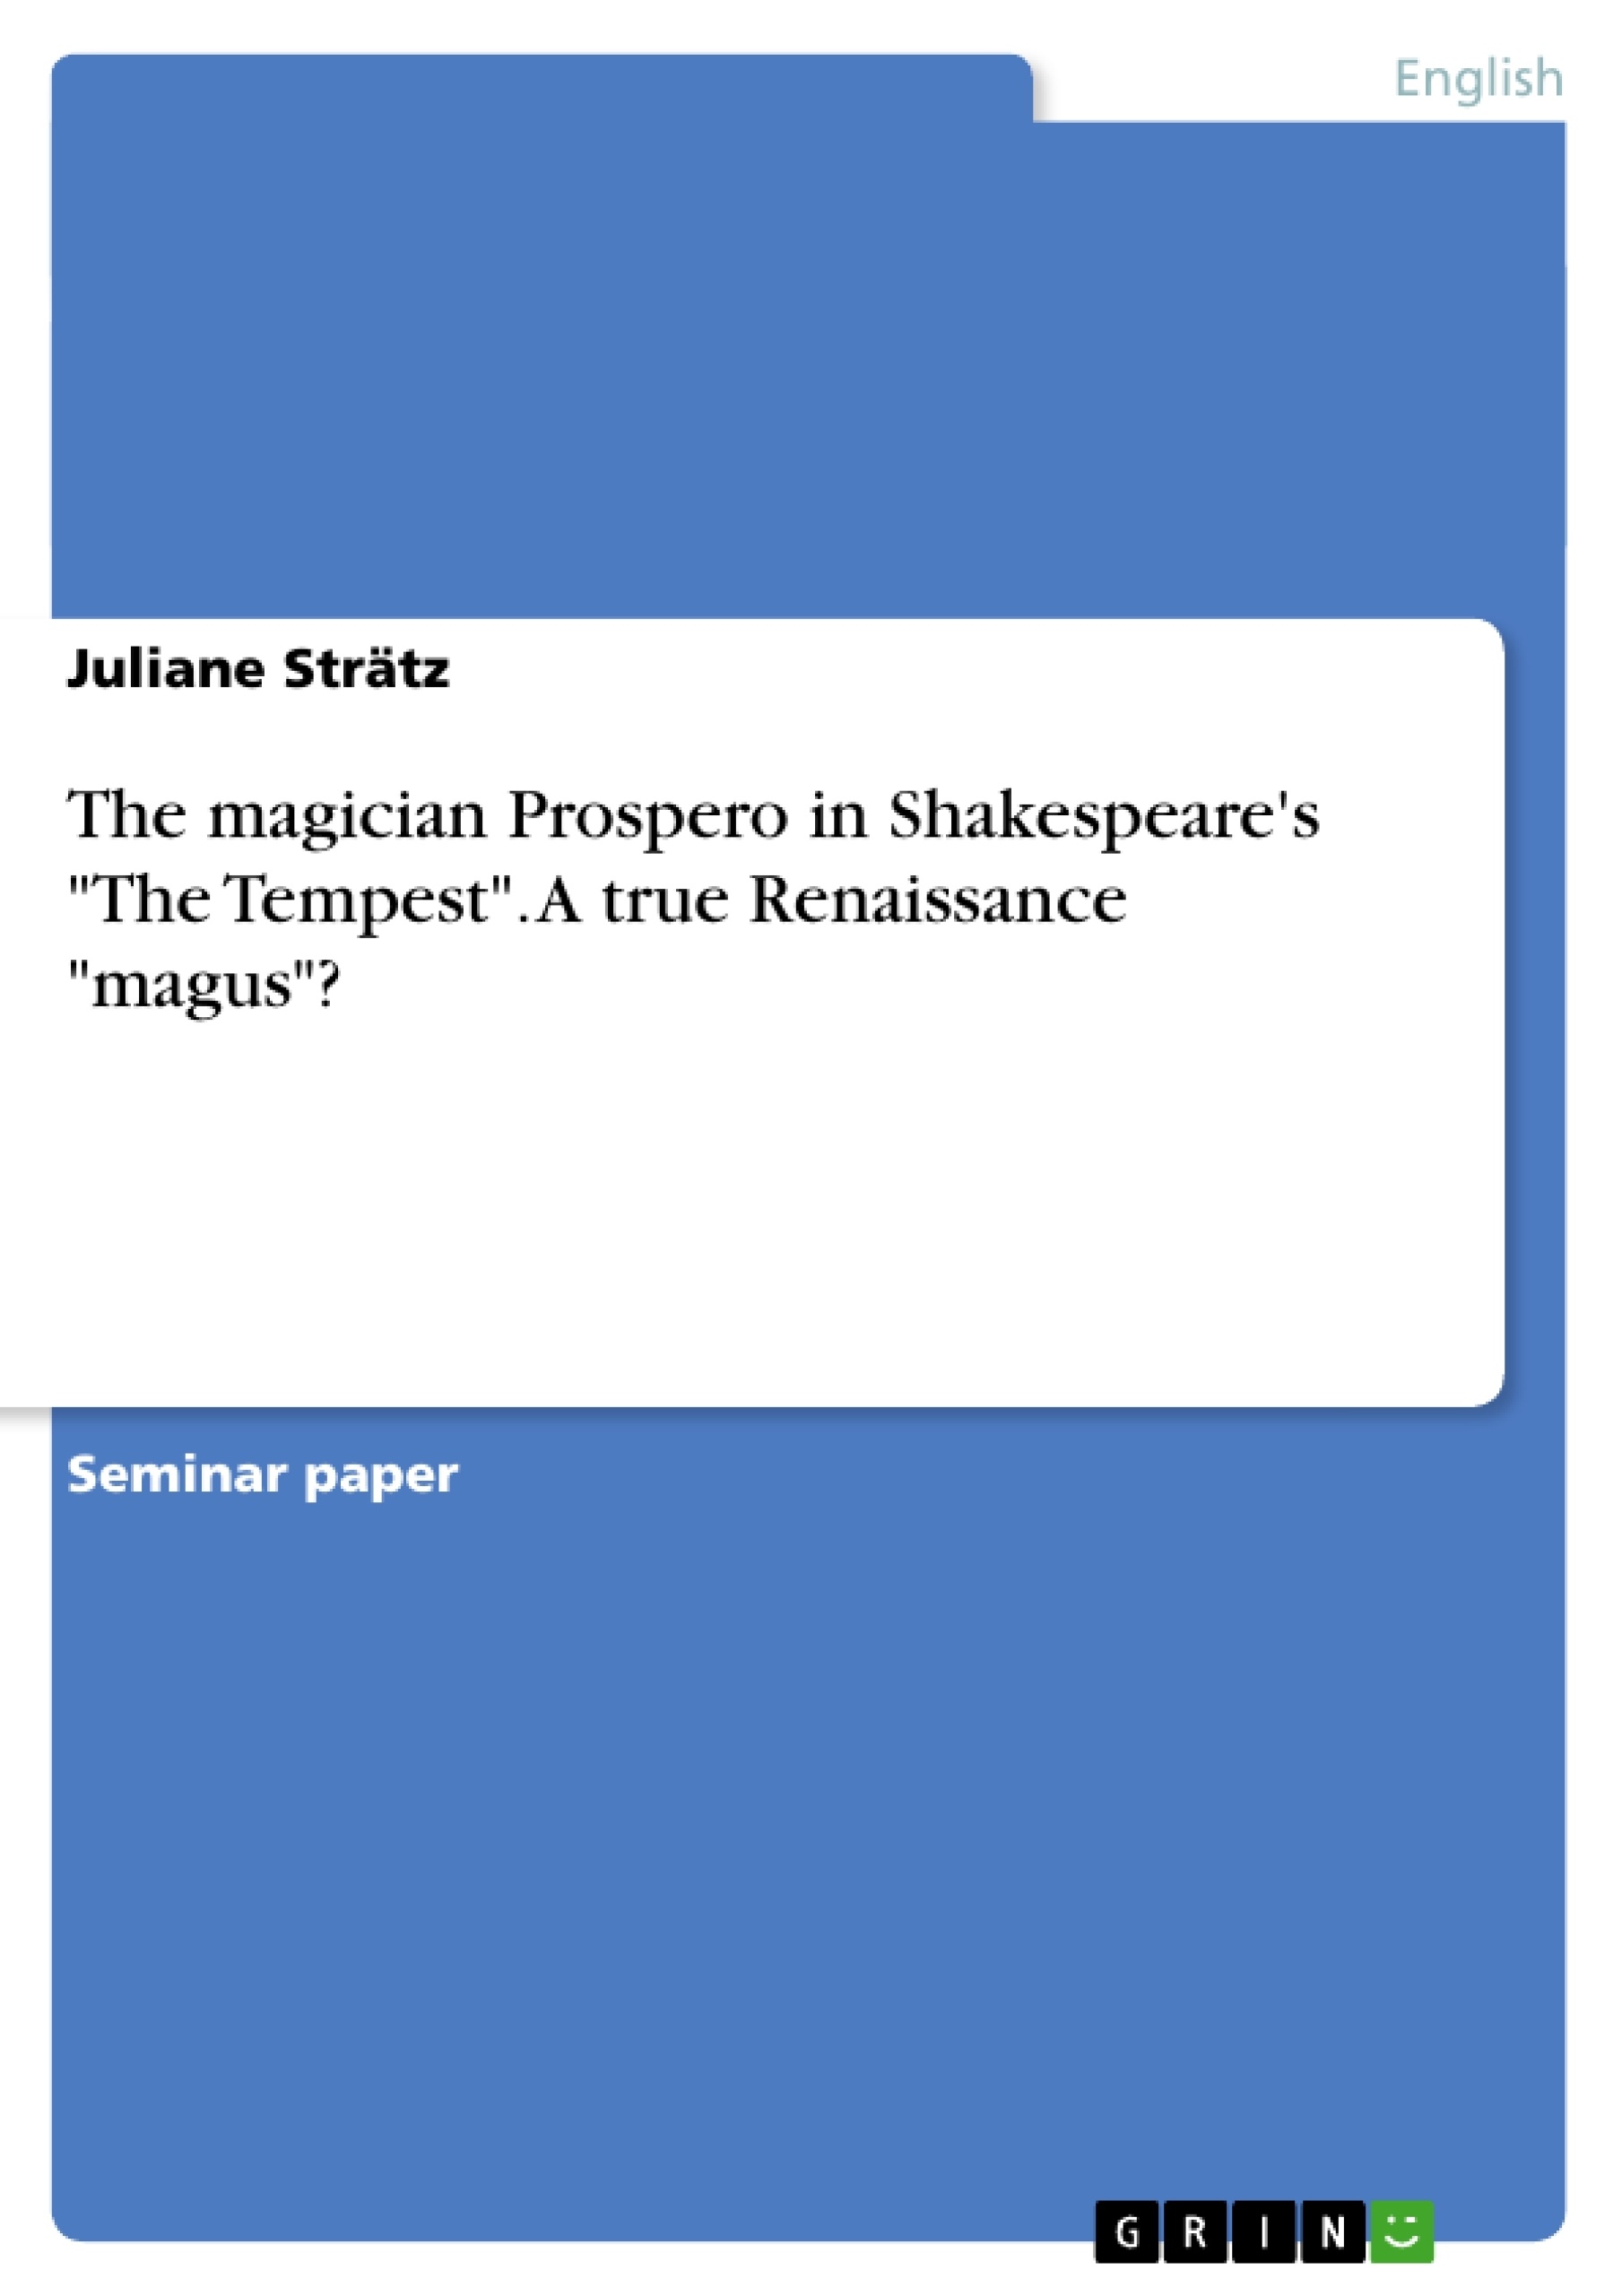 Titre: The magician Prospero in Shakespeare's "The Tempest". A true Renaissance "magus"?